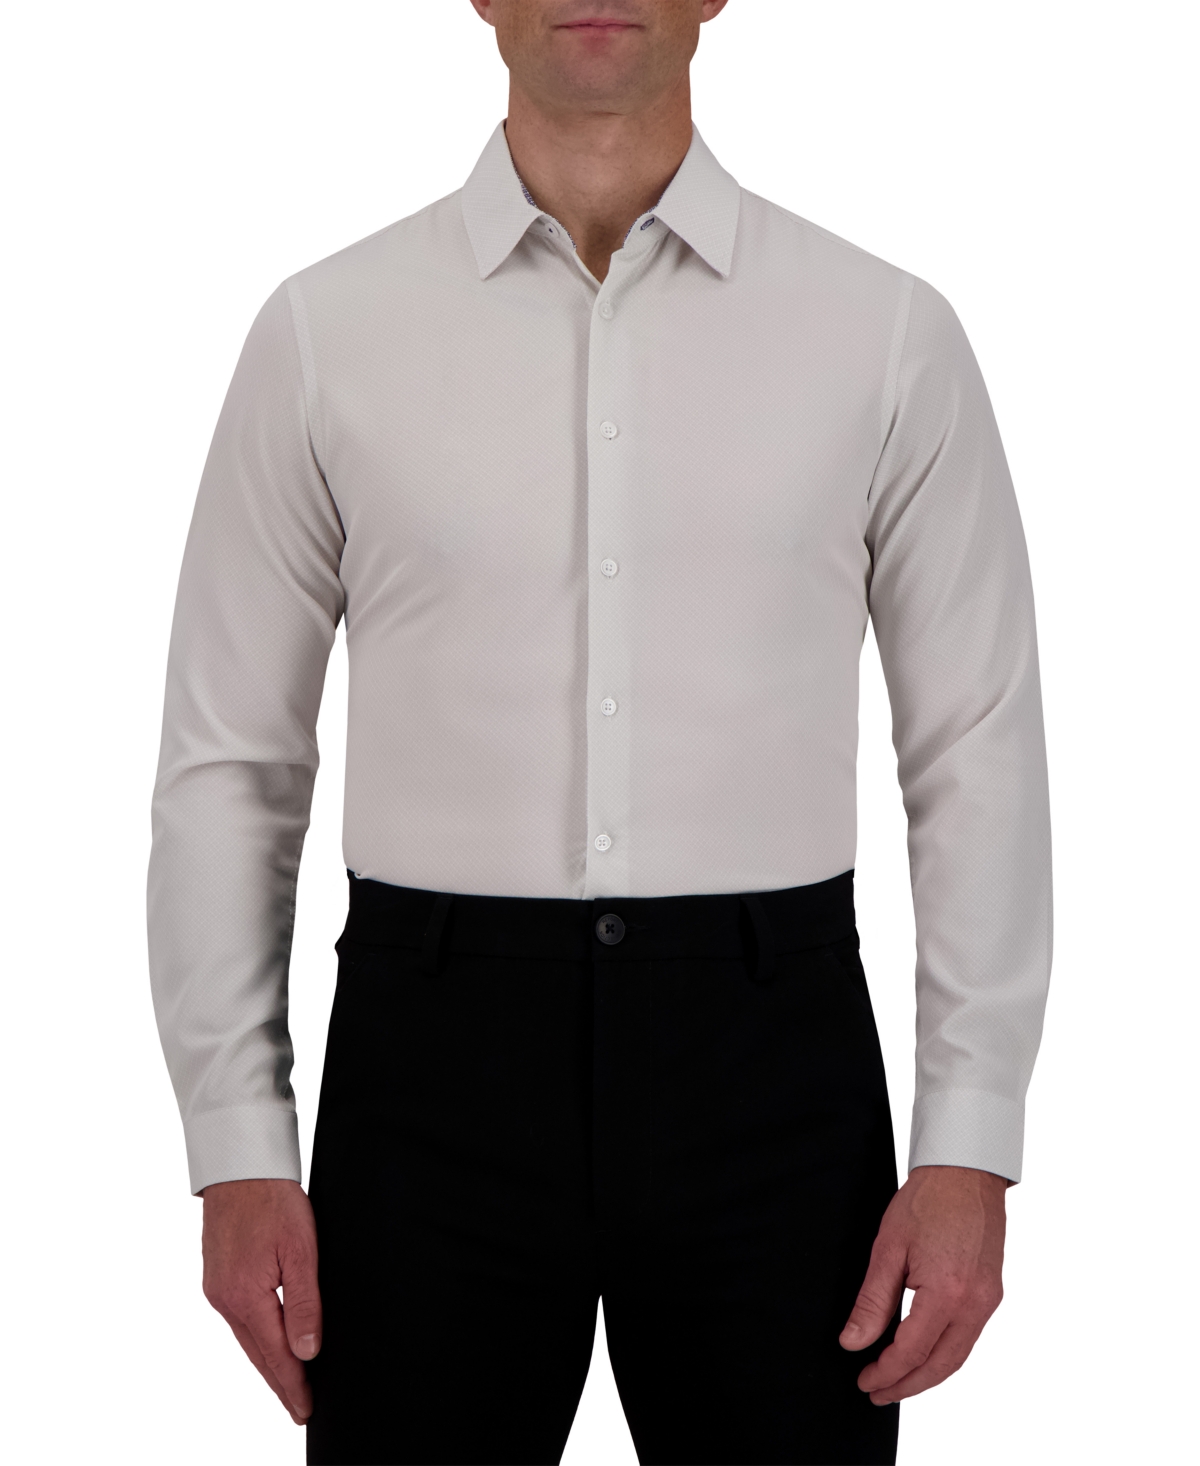 Men's Slim-Fit Motif-Print Dress Shirt - White